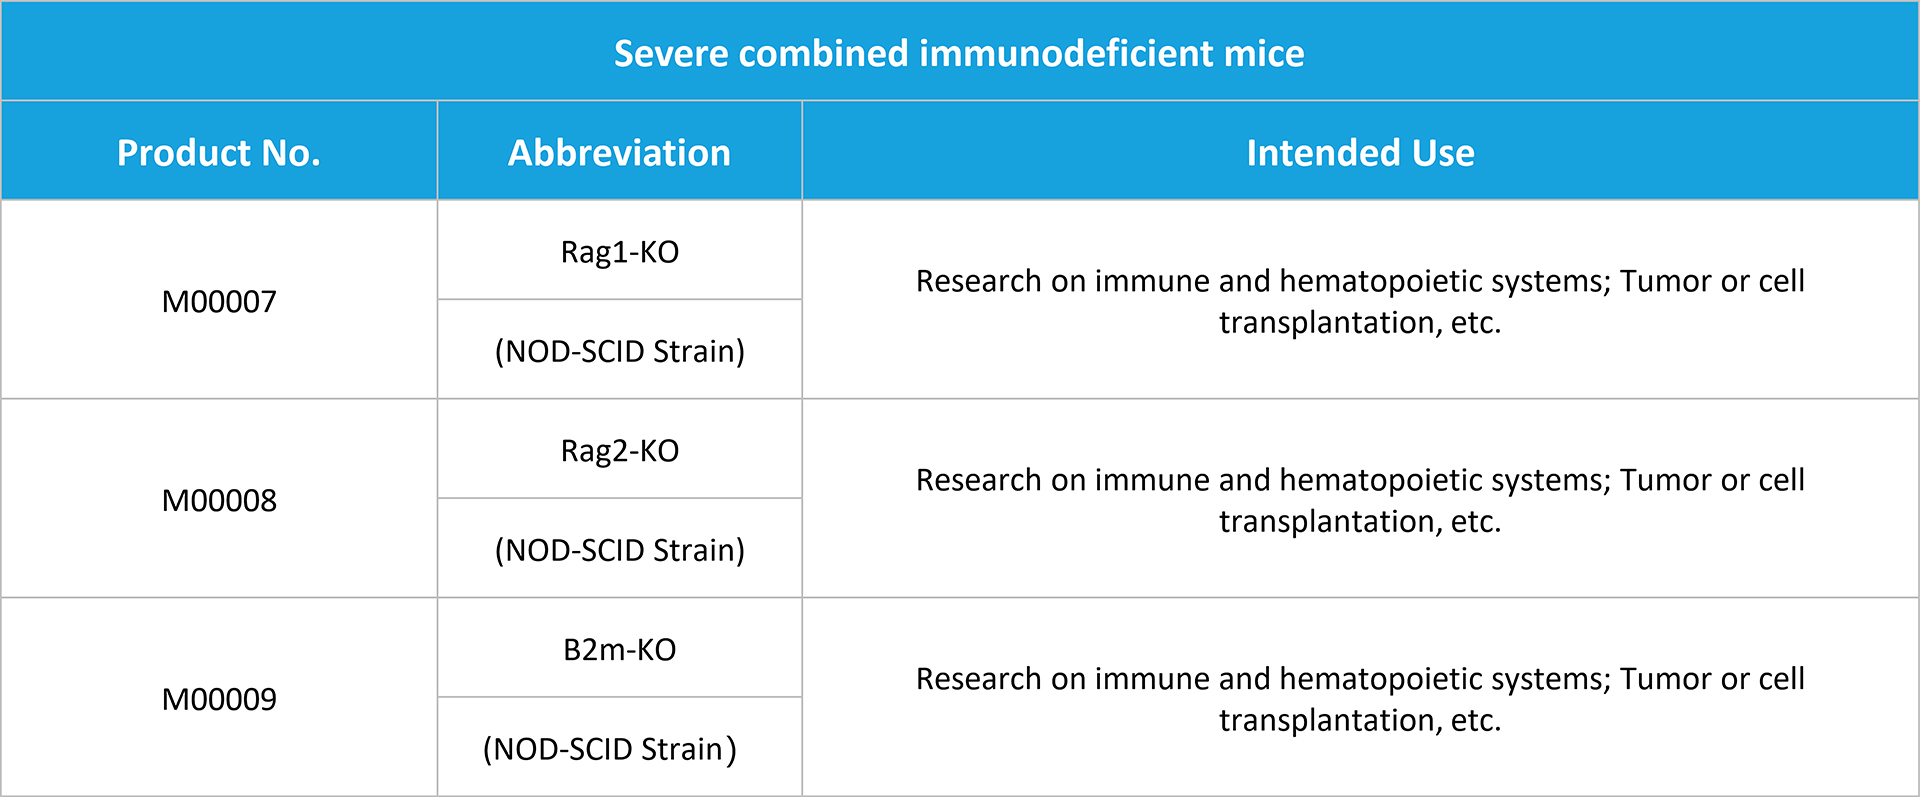 Miševi s teškim kombinovanim imunodeficijencijom